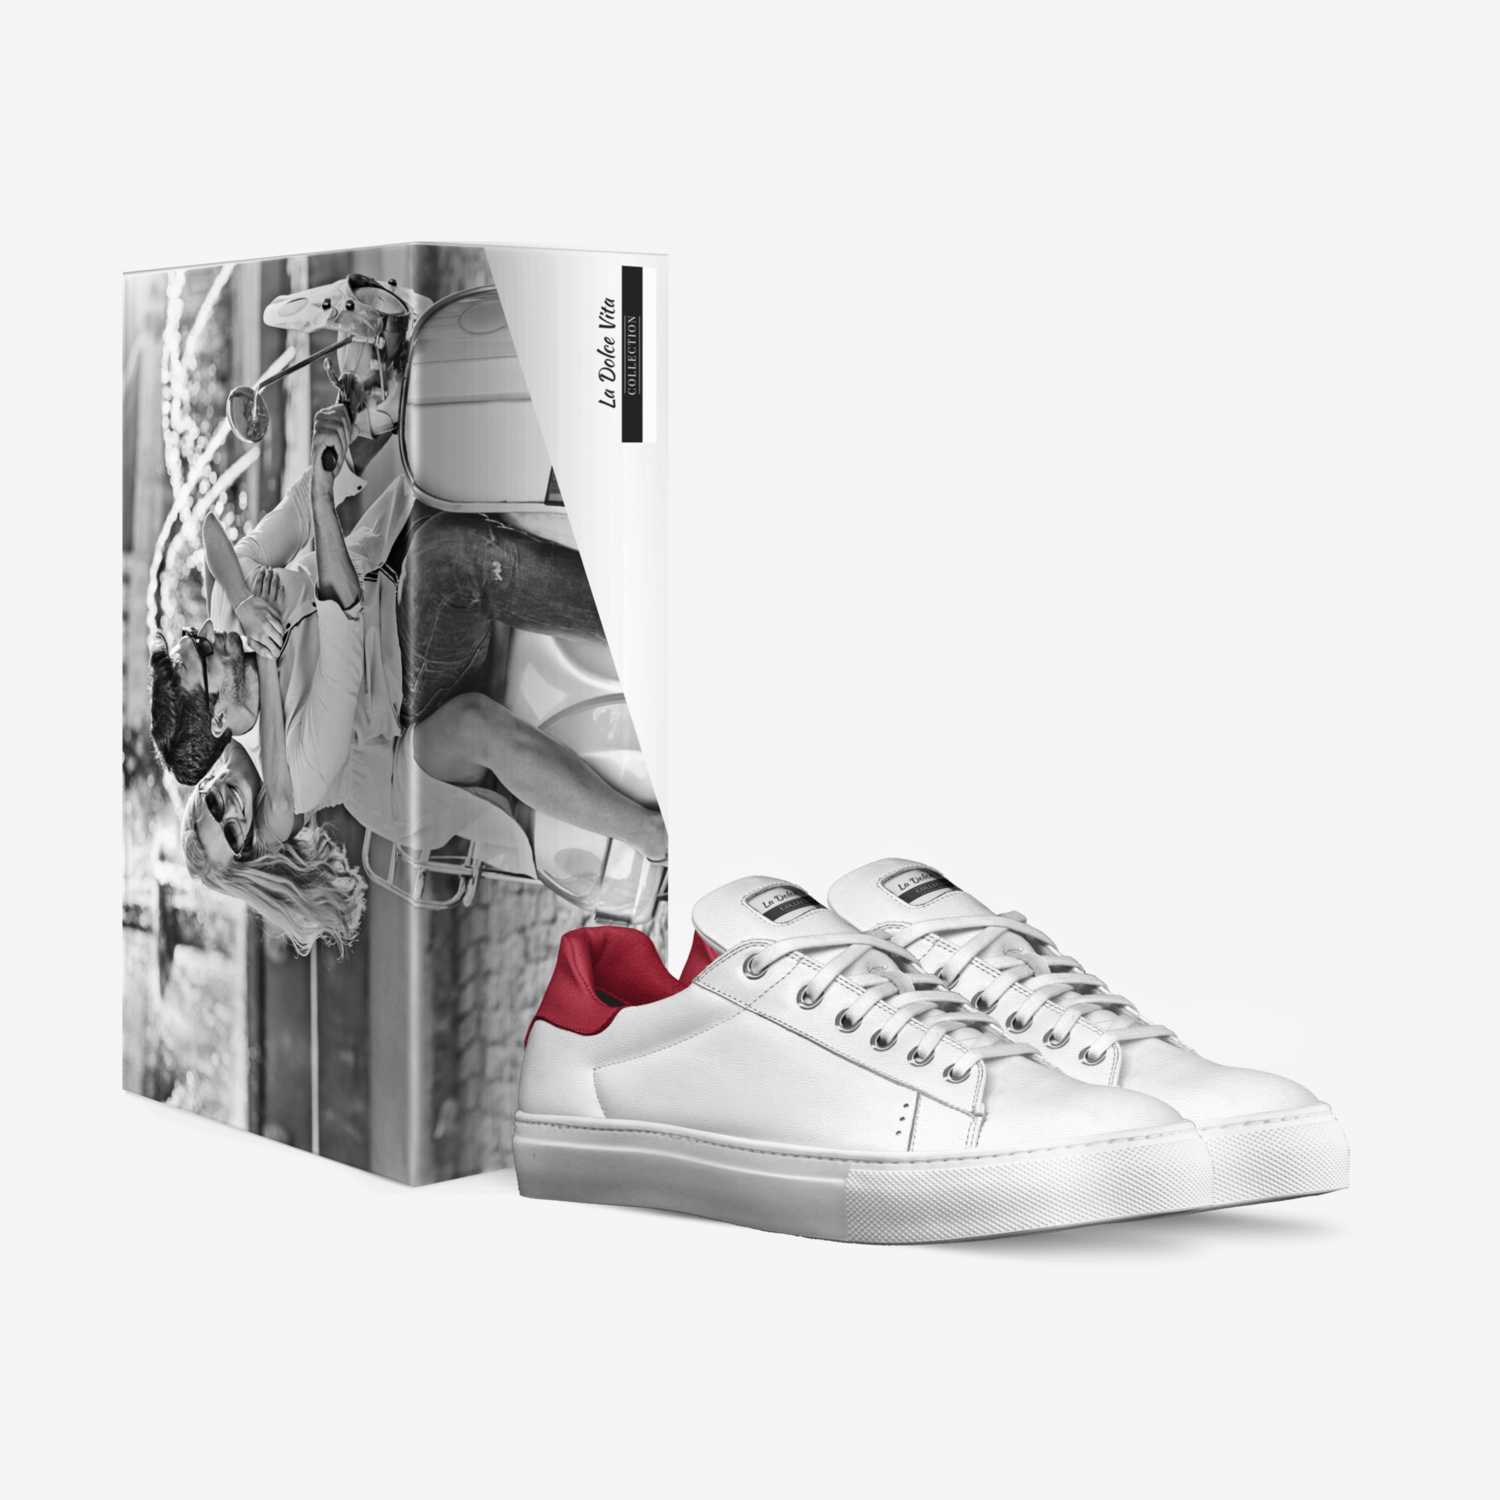 DP custom made in Italy shoes by Ldv Ldv | Box view